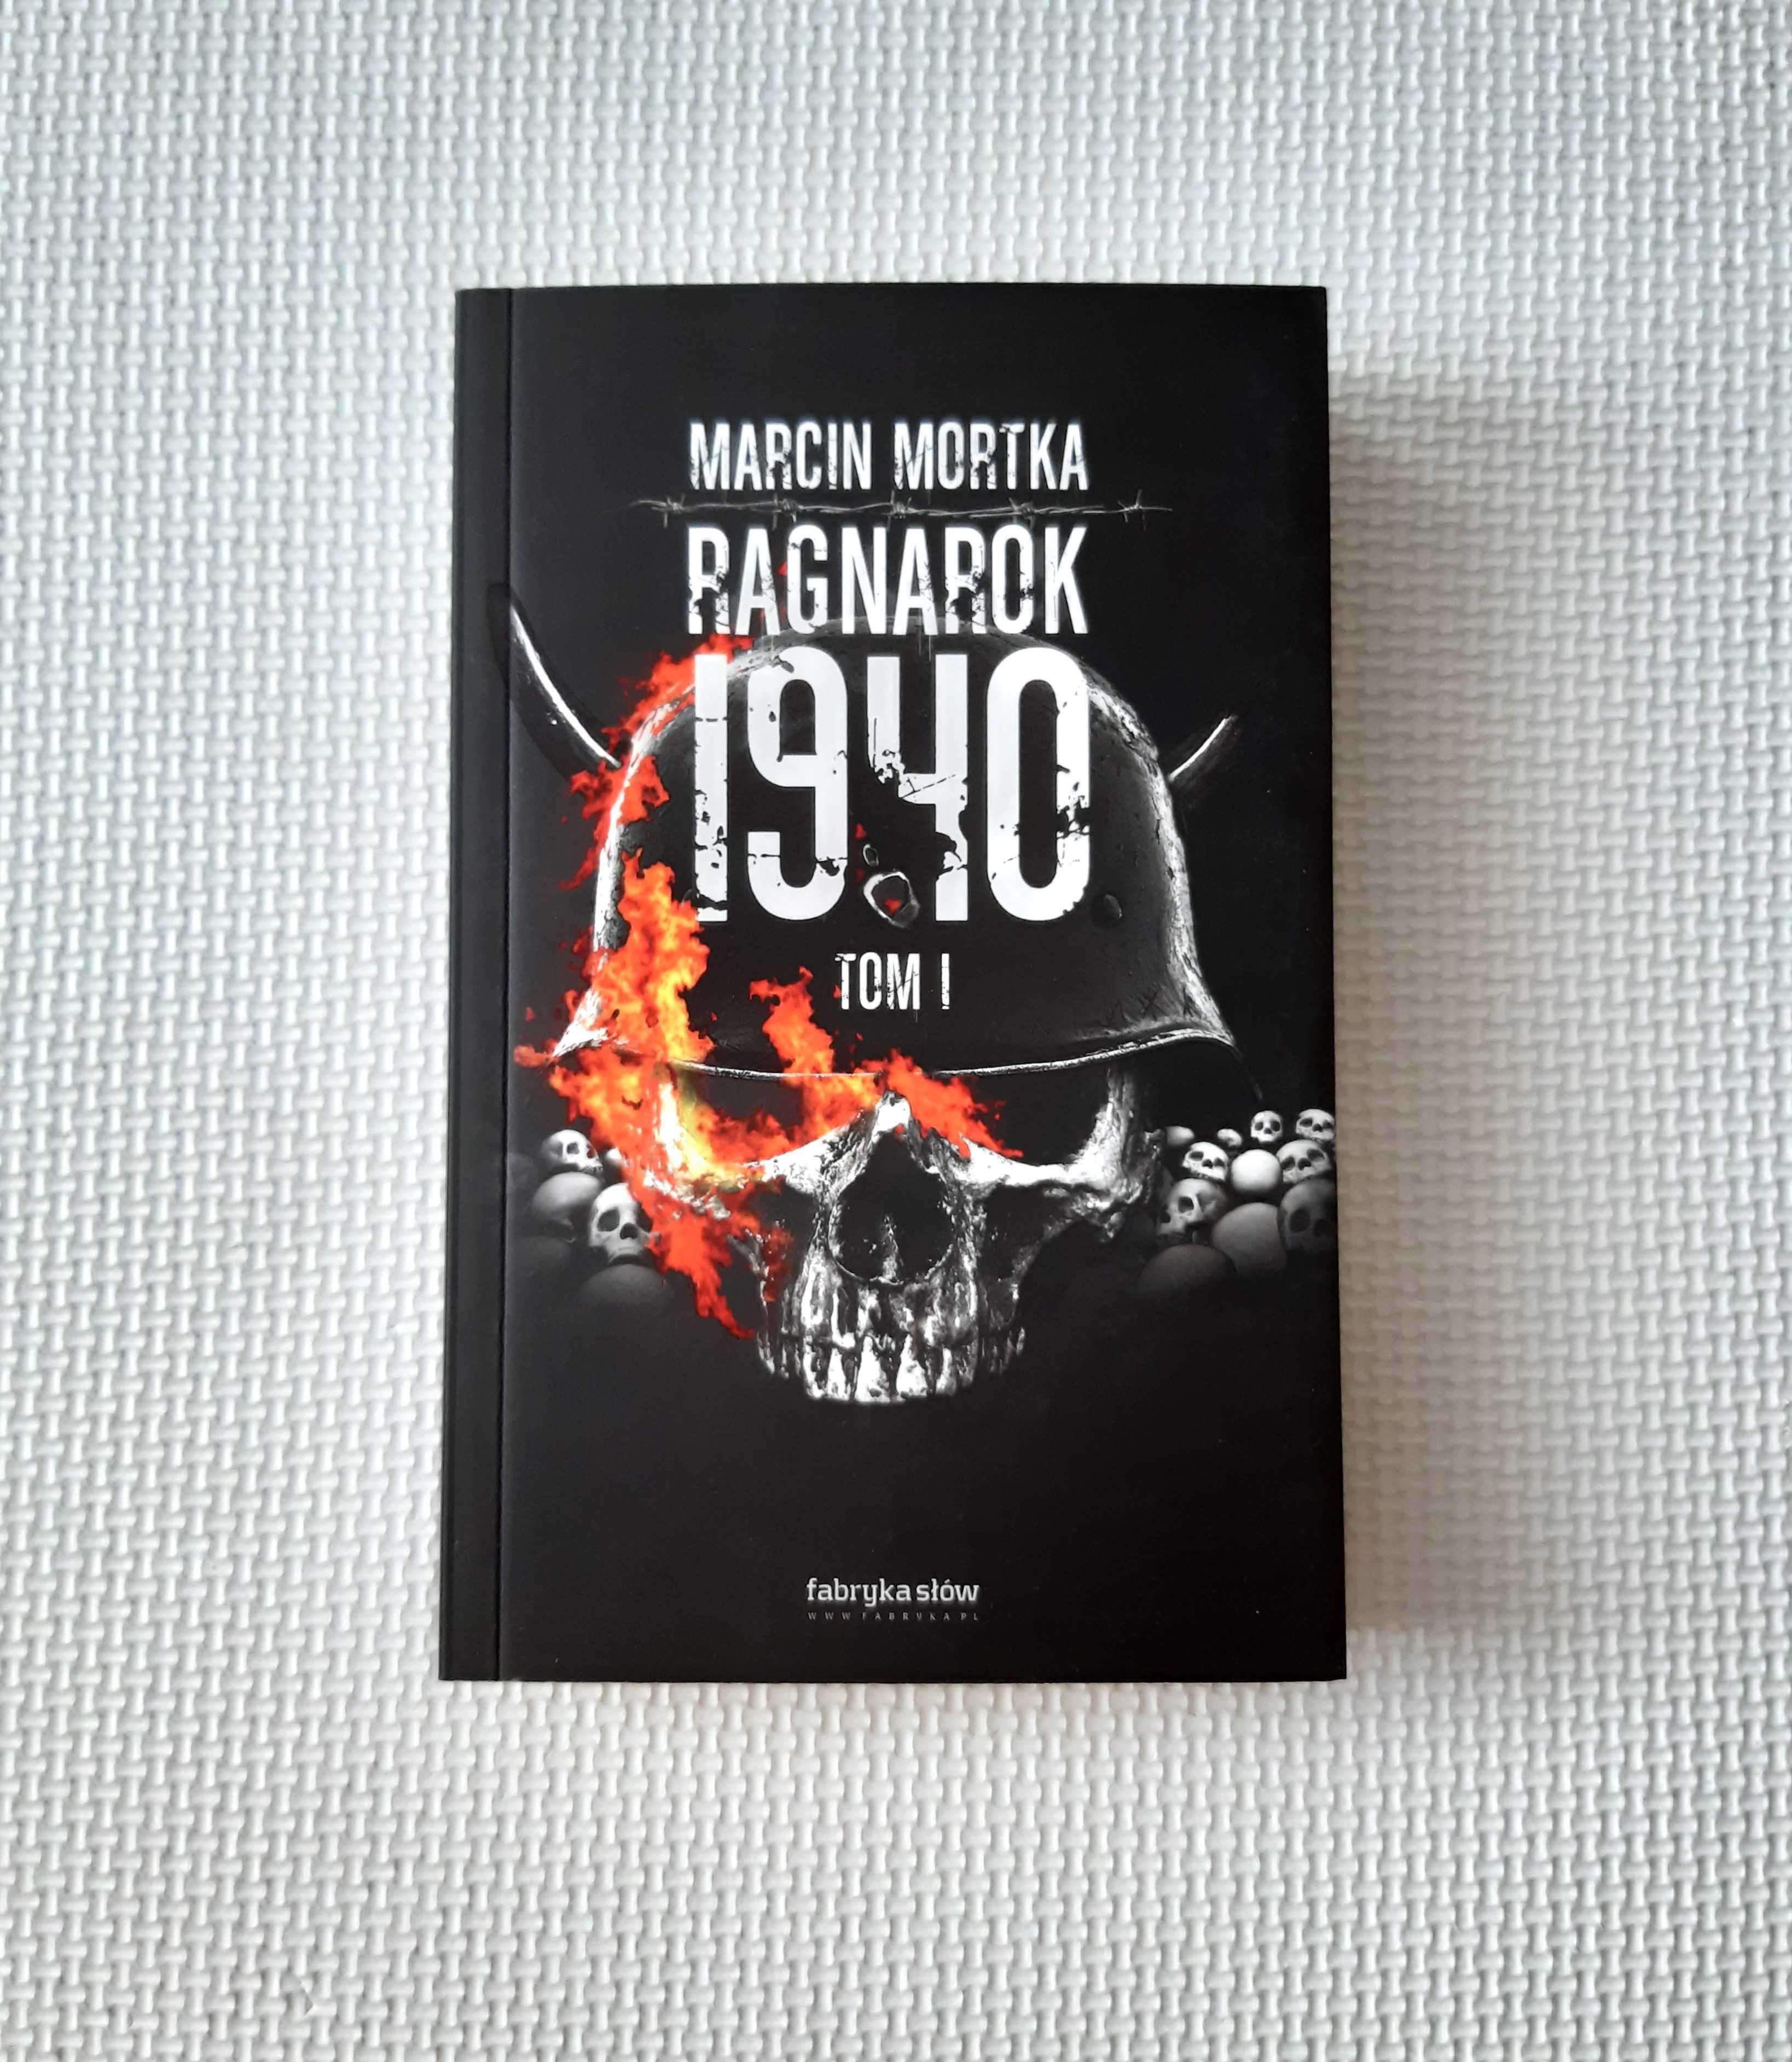 Ragnarok 1940 Tom 1 Marcin Mortka